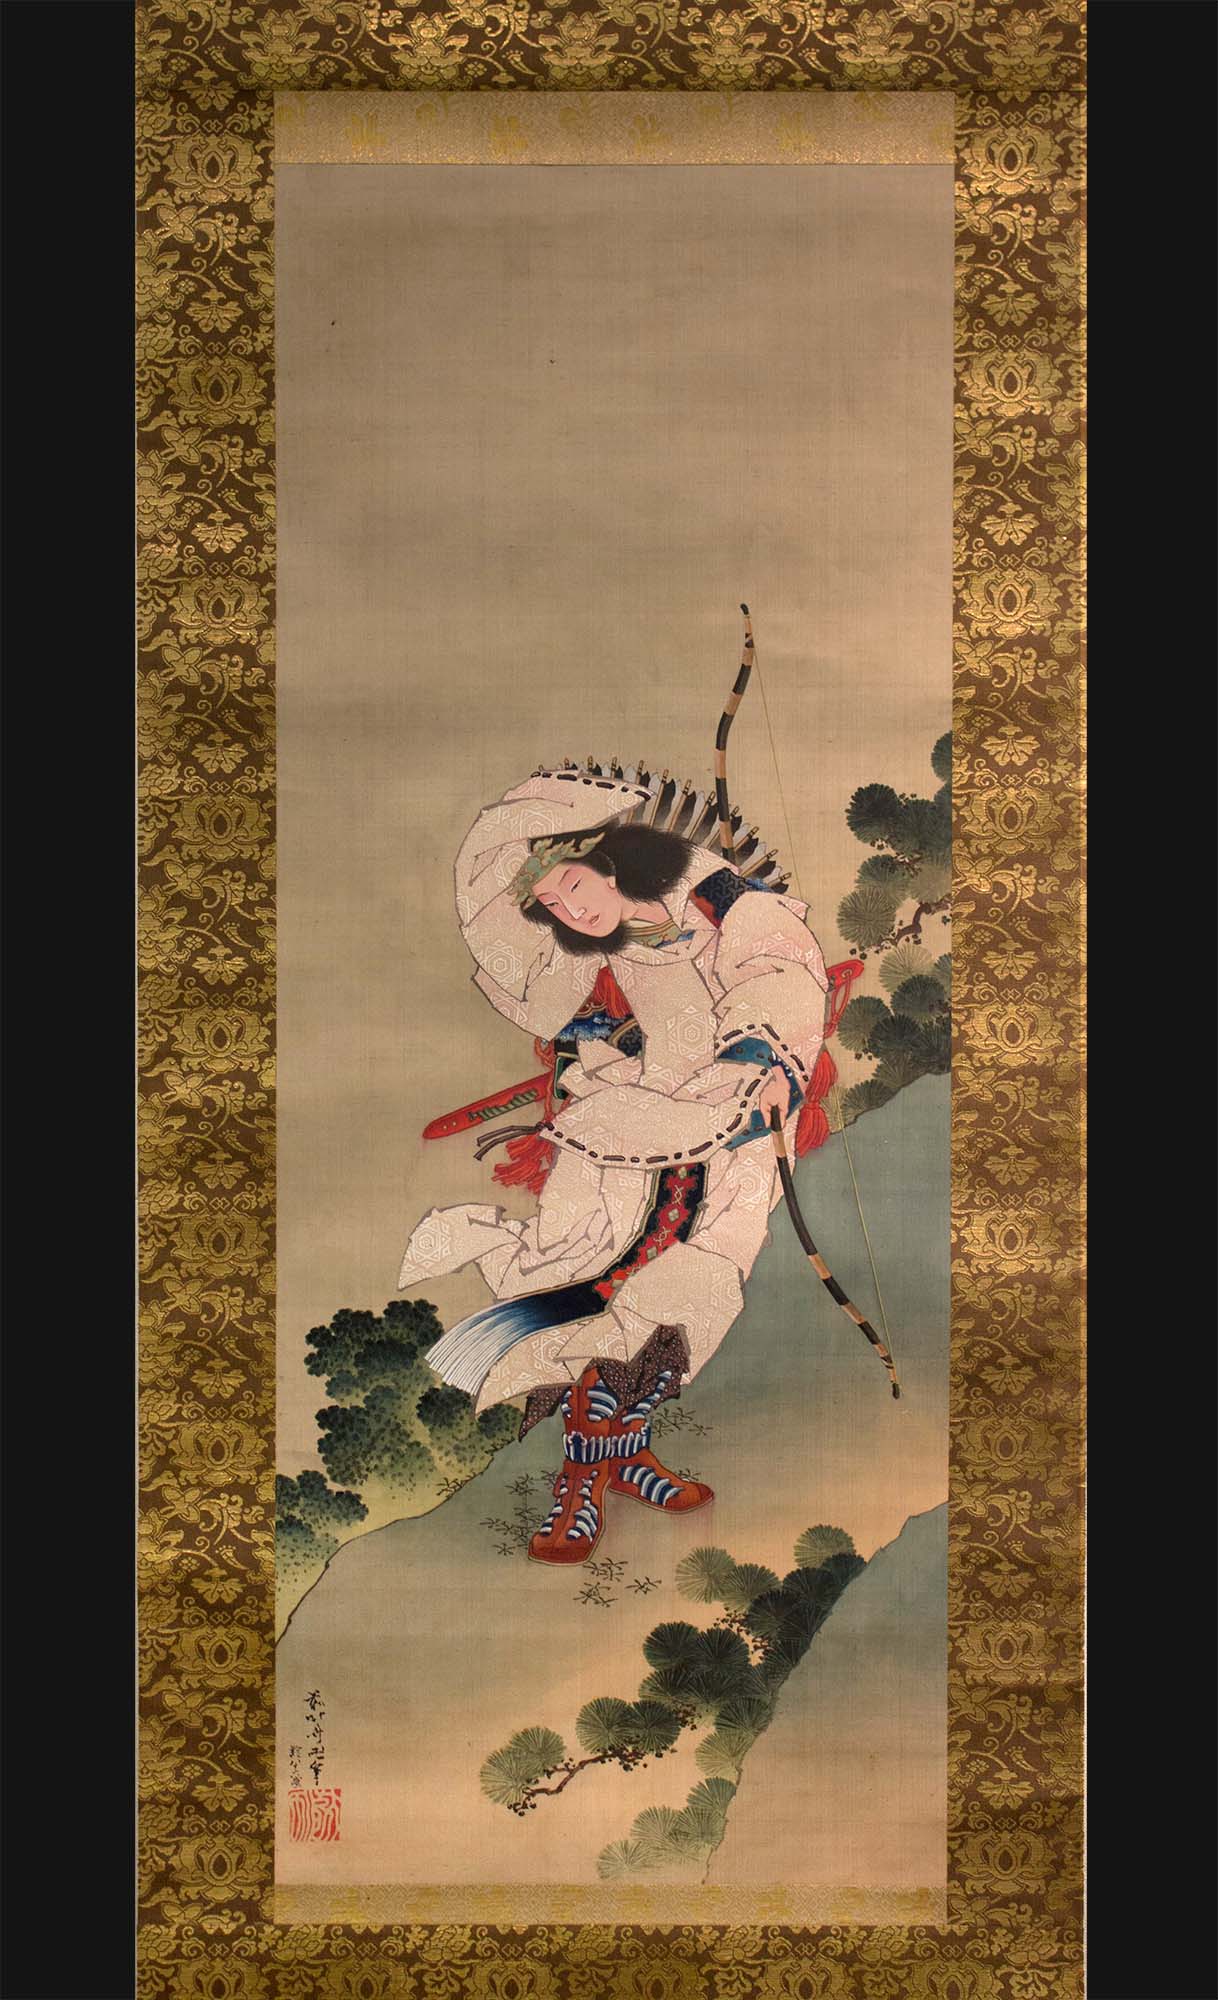 The original The Legendary Empress Jingū by Studio of Katsushika Hokusai